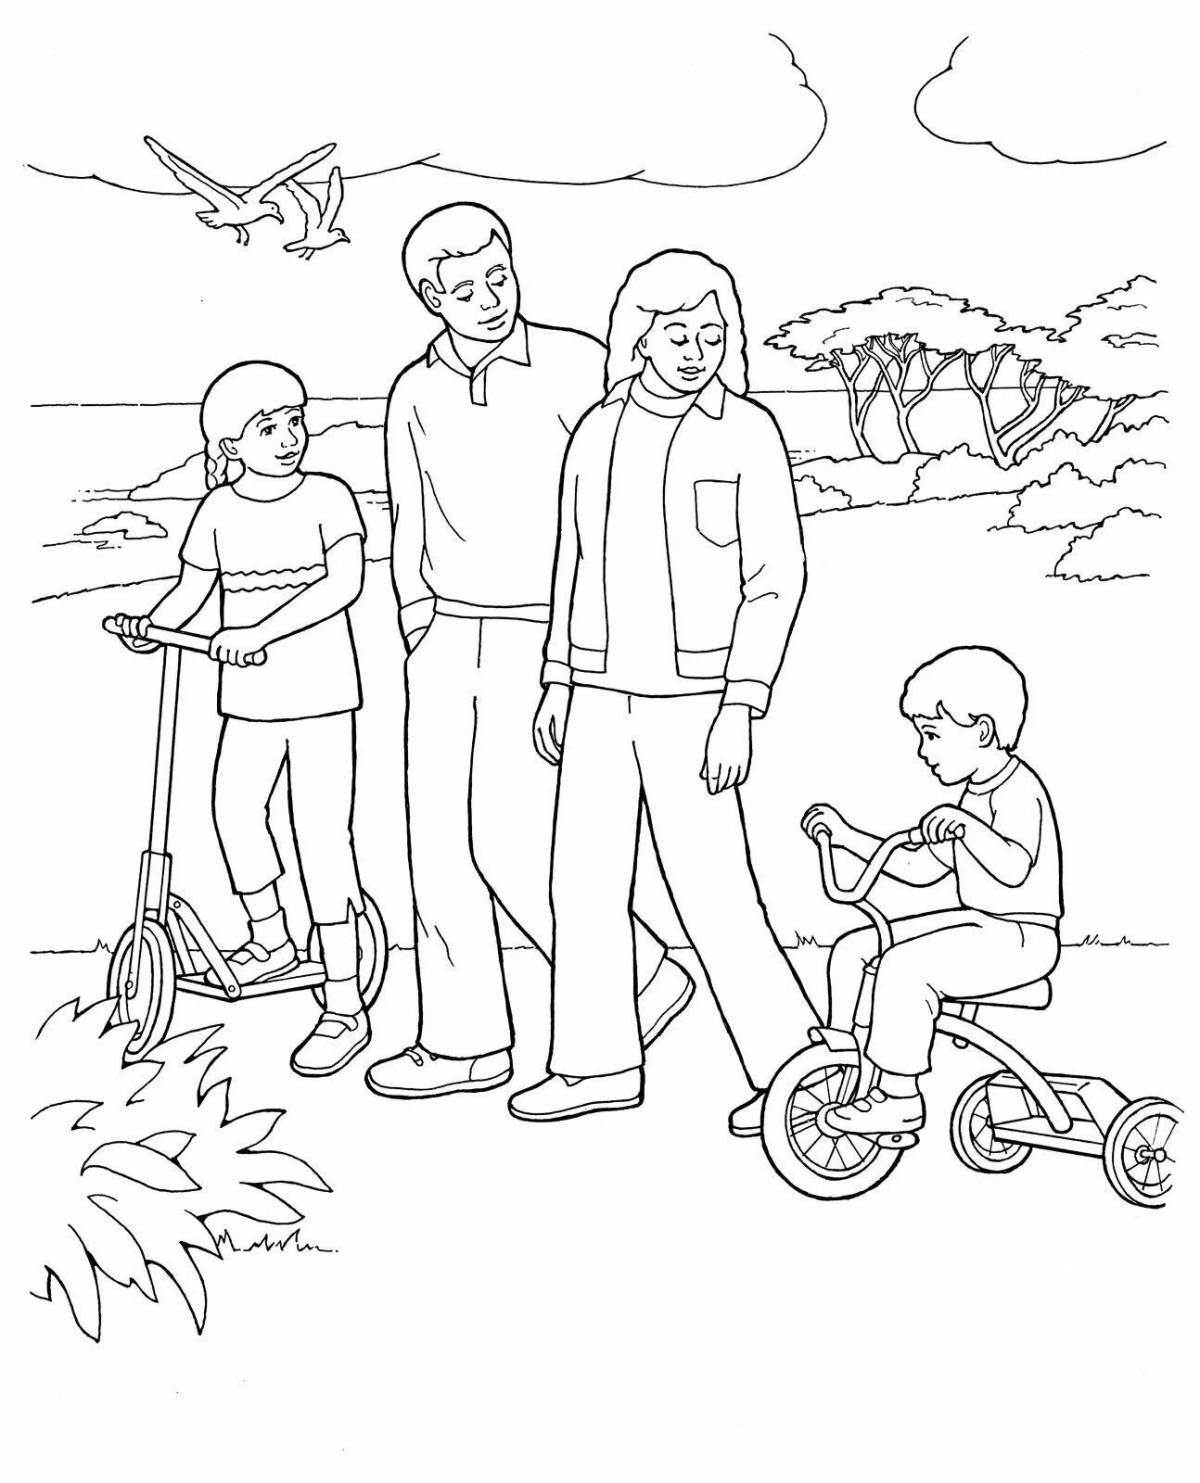 Fun sports family coloring book